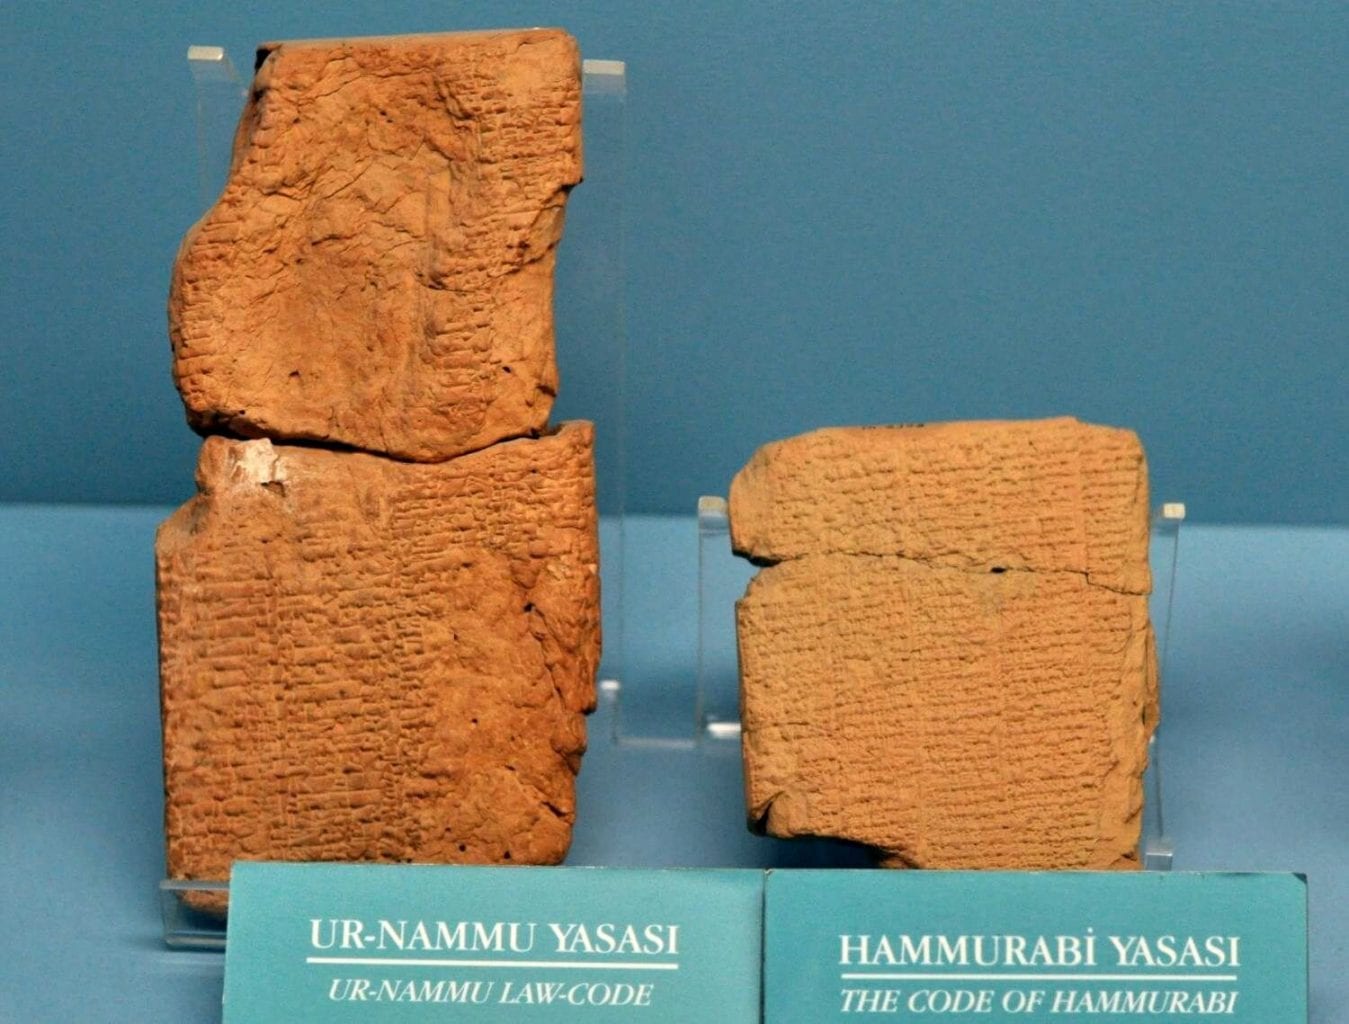 Кодекс законов Ур-Намму и Кодекс Хаммурапи. Предоставлено: TurkishArchaeoNews.